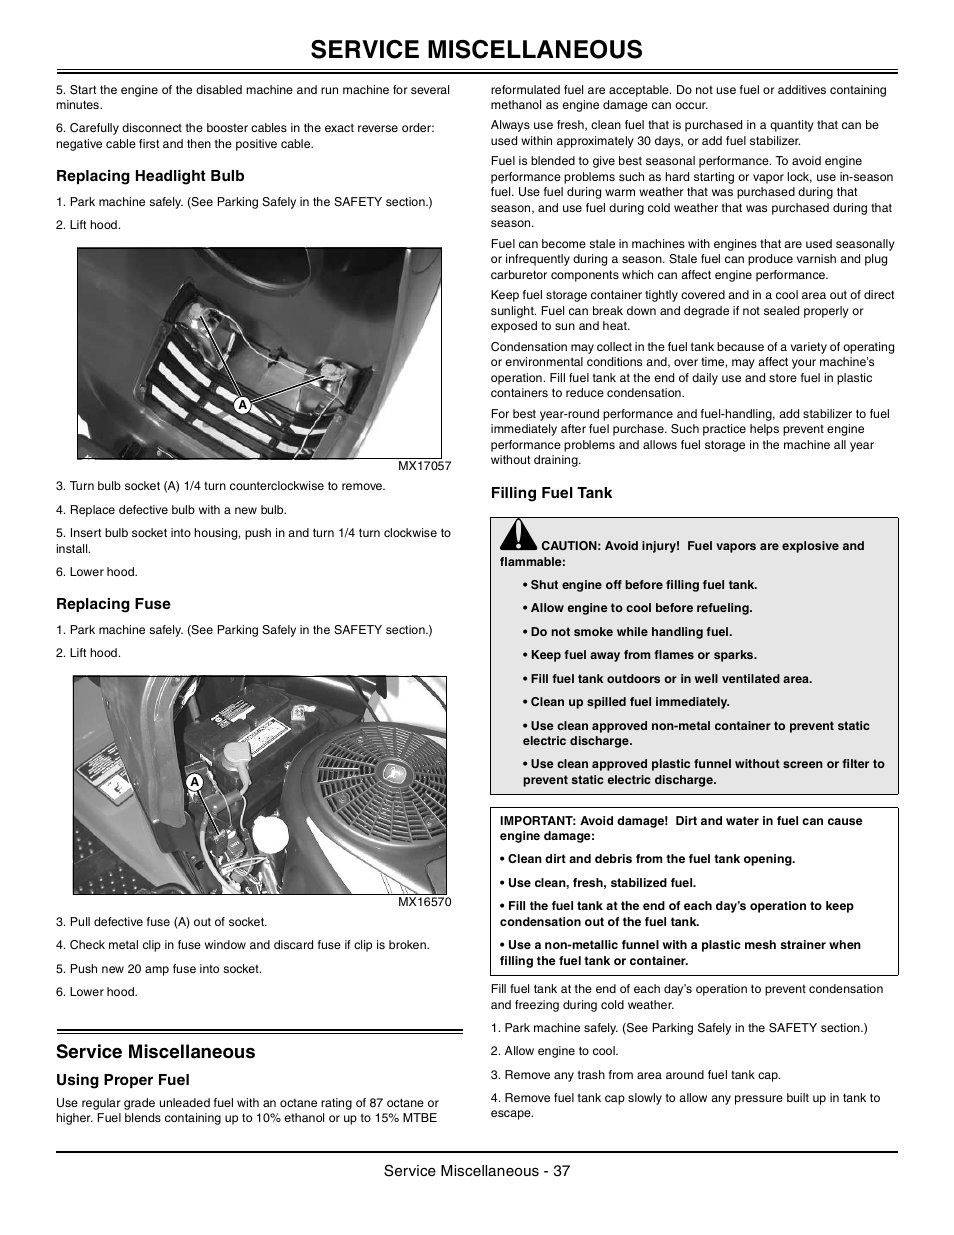 Replacing headlight bulb, Replacing fuse, Service miscellaneous | Using proper fuel, Filling fuel tank | John Deere la105 User Manual | Page 38 / 52